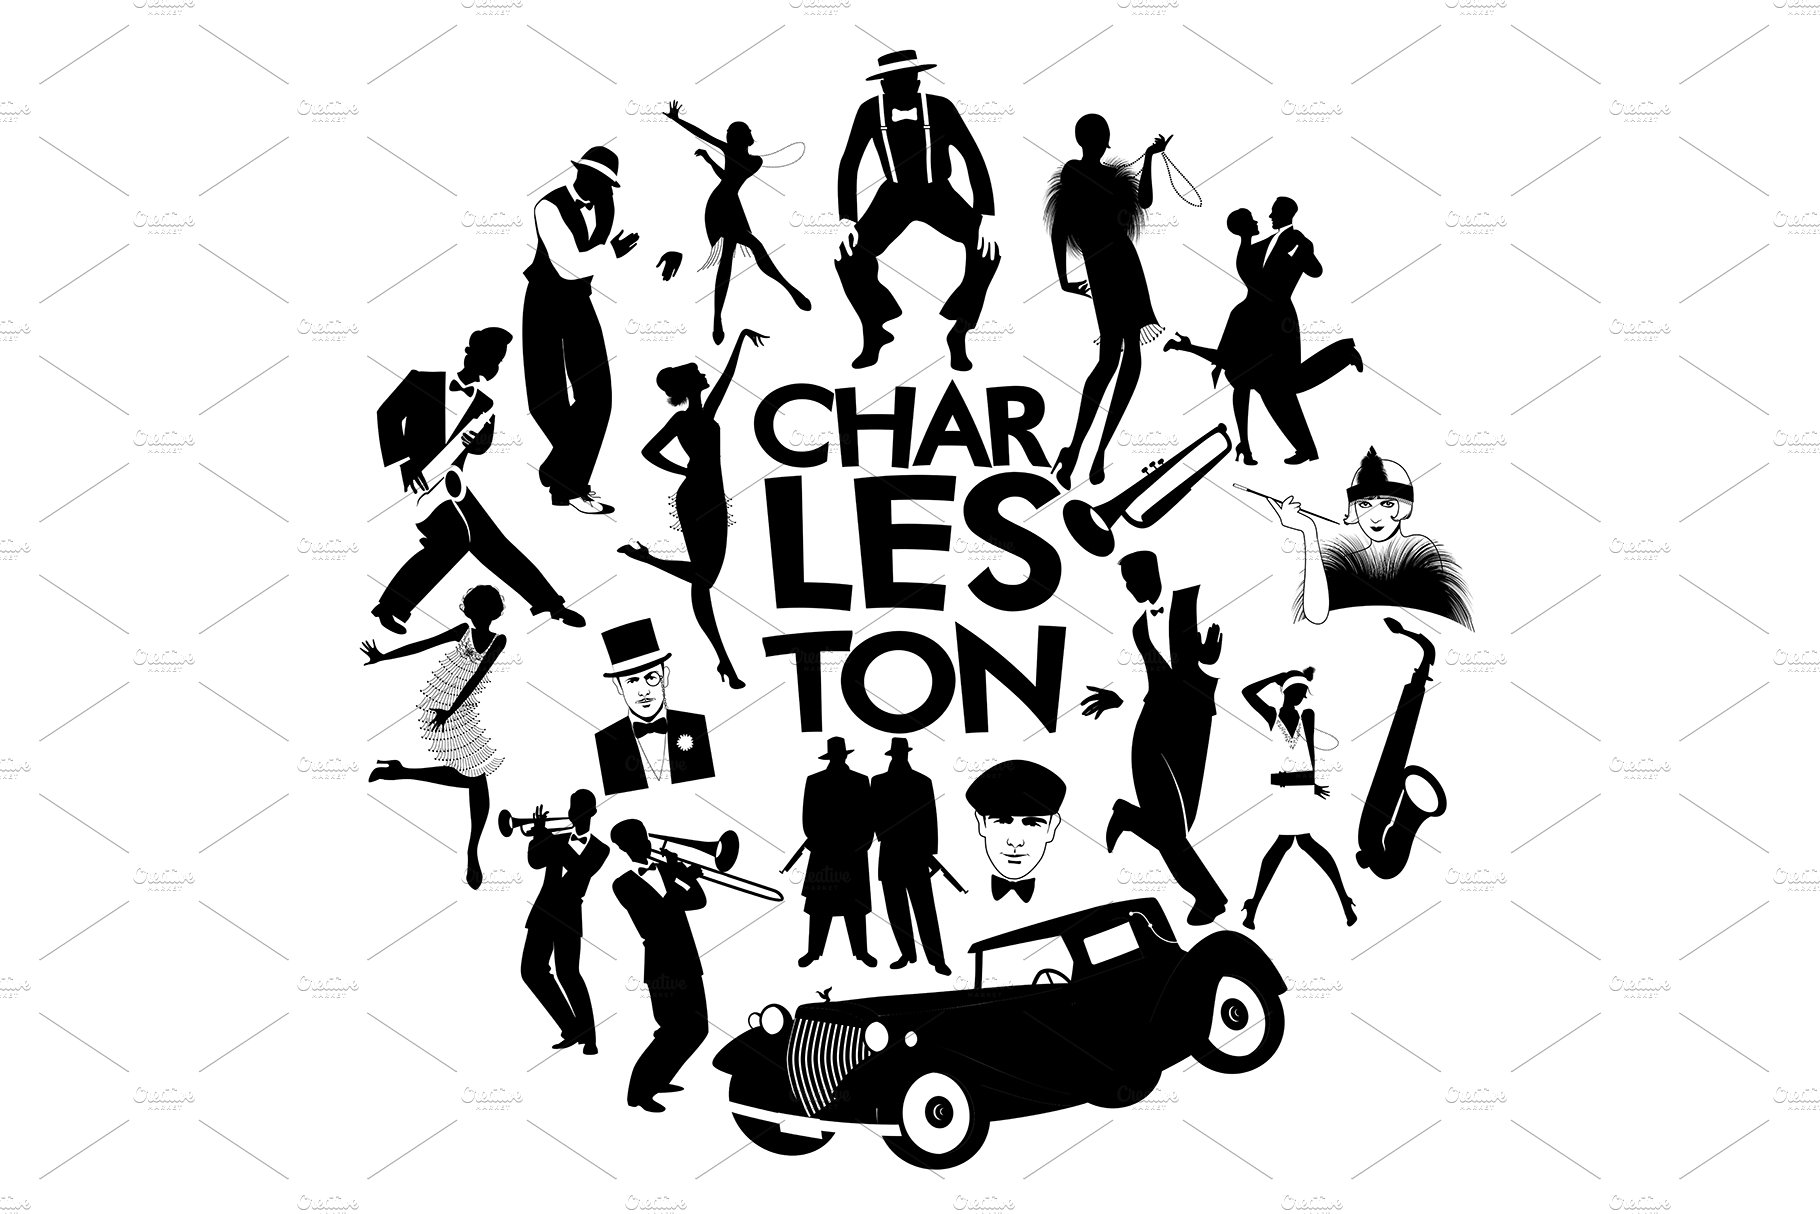 Charleston dance icons cover image.